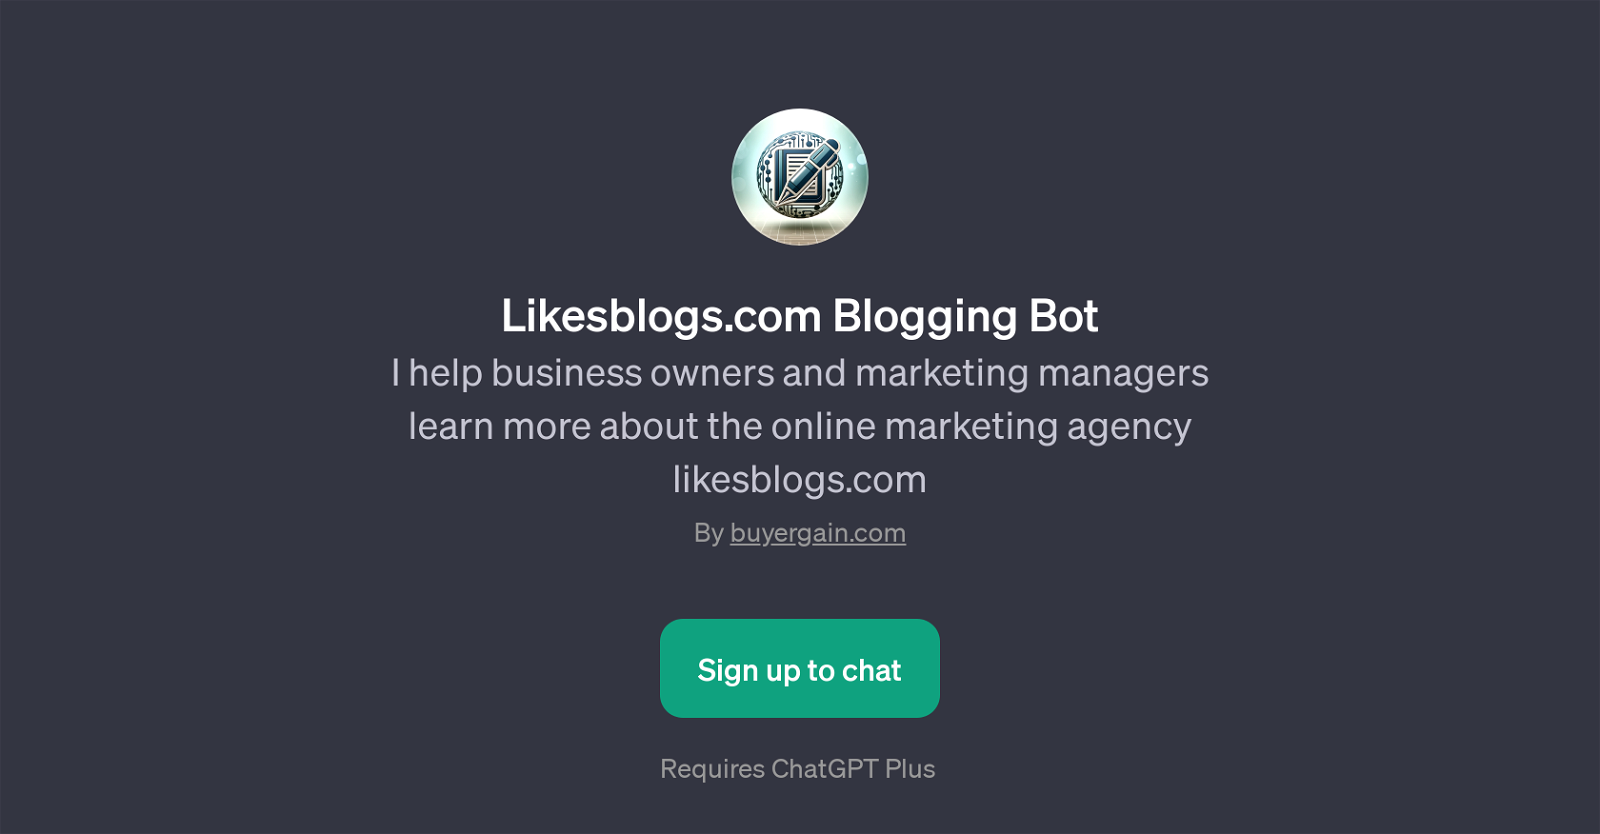 Likesblogs.com Blogging Bot website